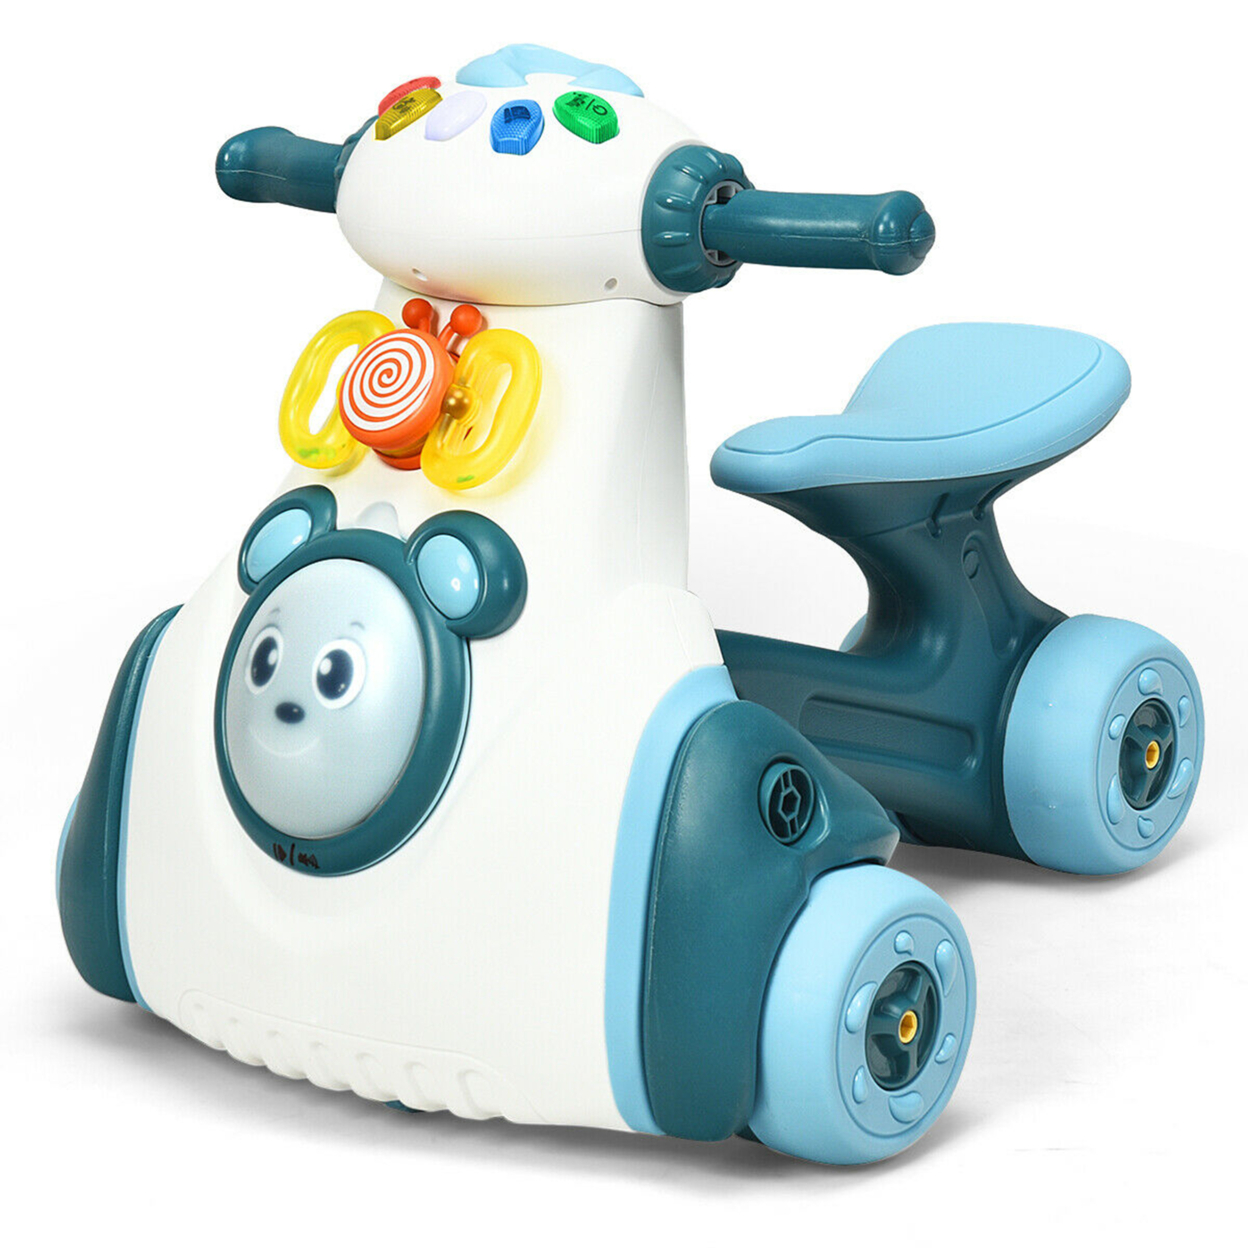 Gymax Baby Balance Bike Musical Ride Toy W/ Sensing Function & Light Toddler Walker - Blue